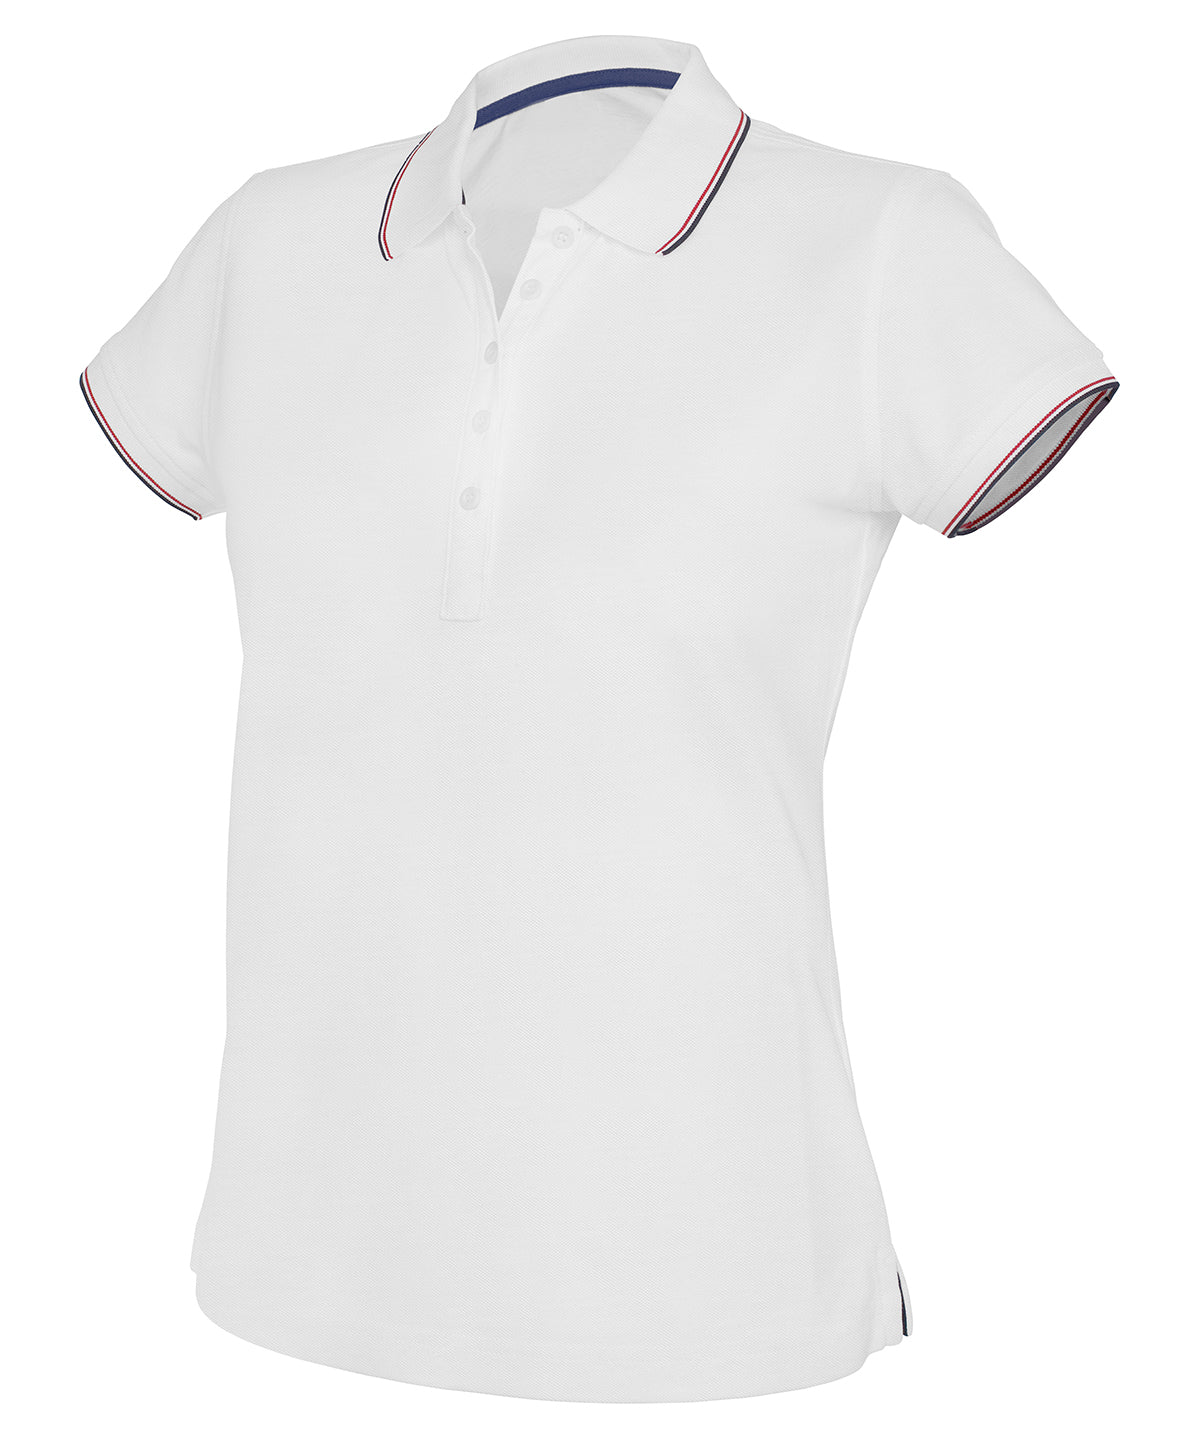 Pólóbolir - Women's Short Sleeve Polo Shirt